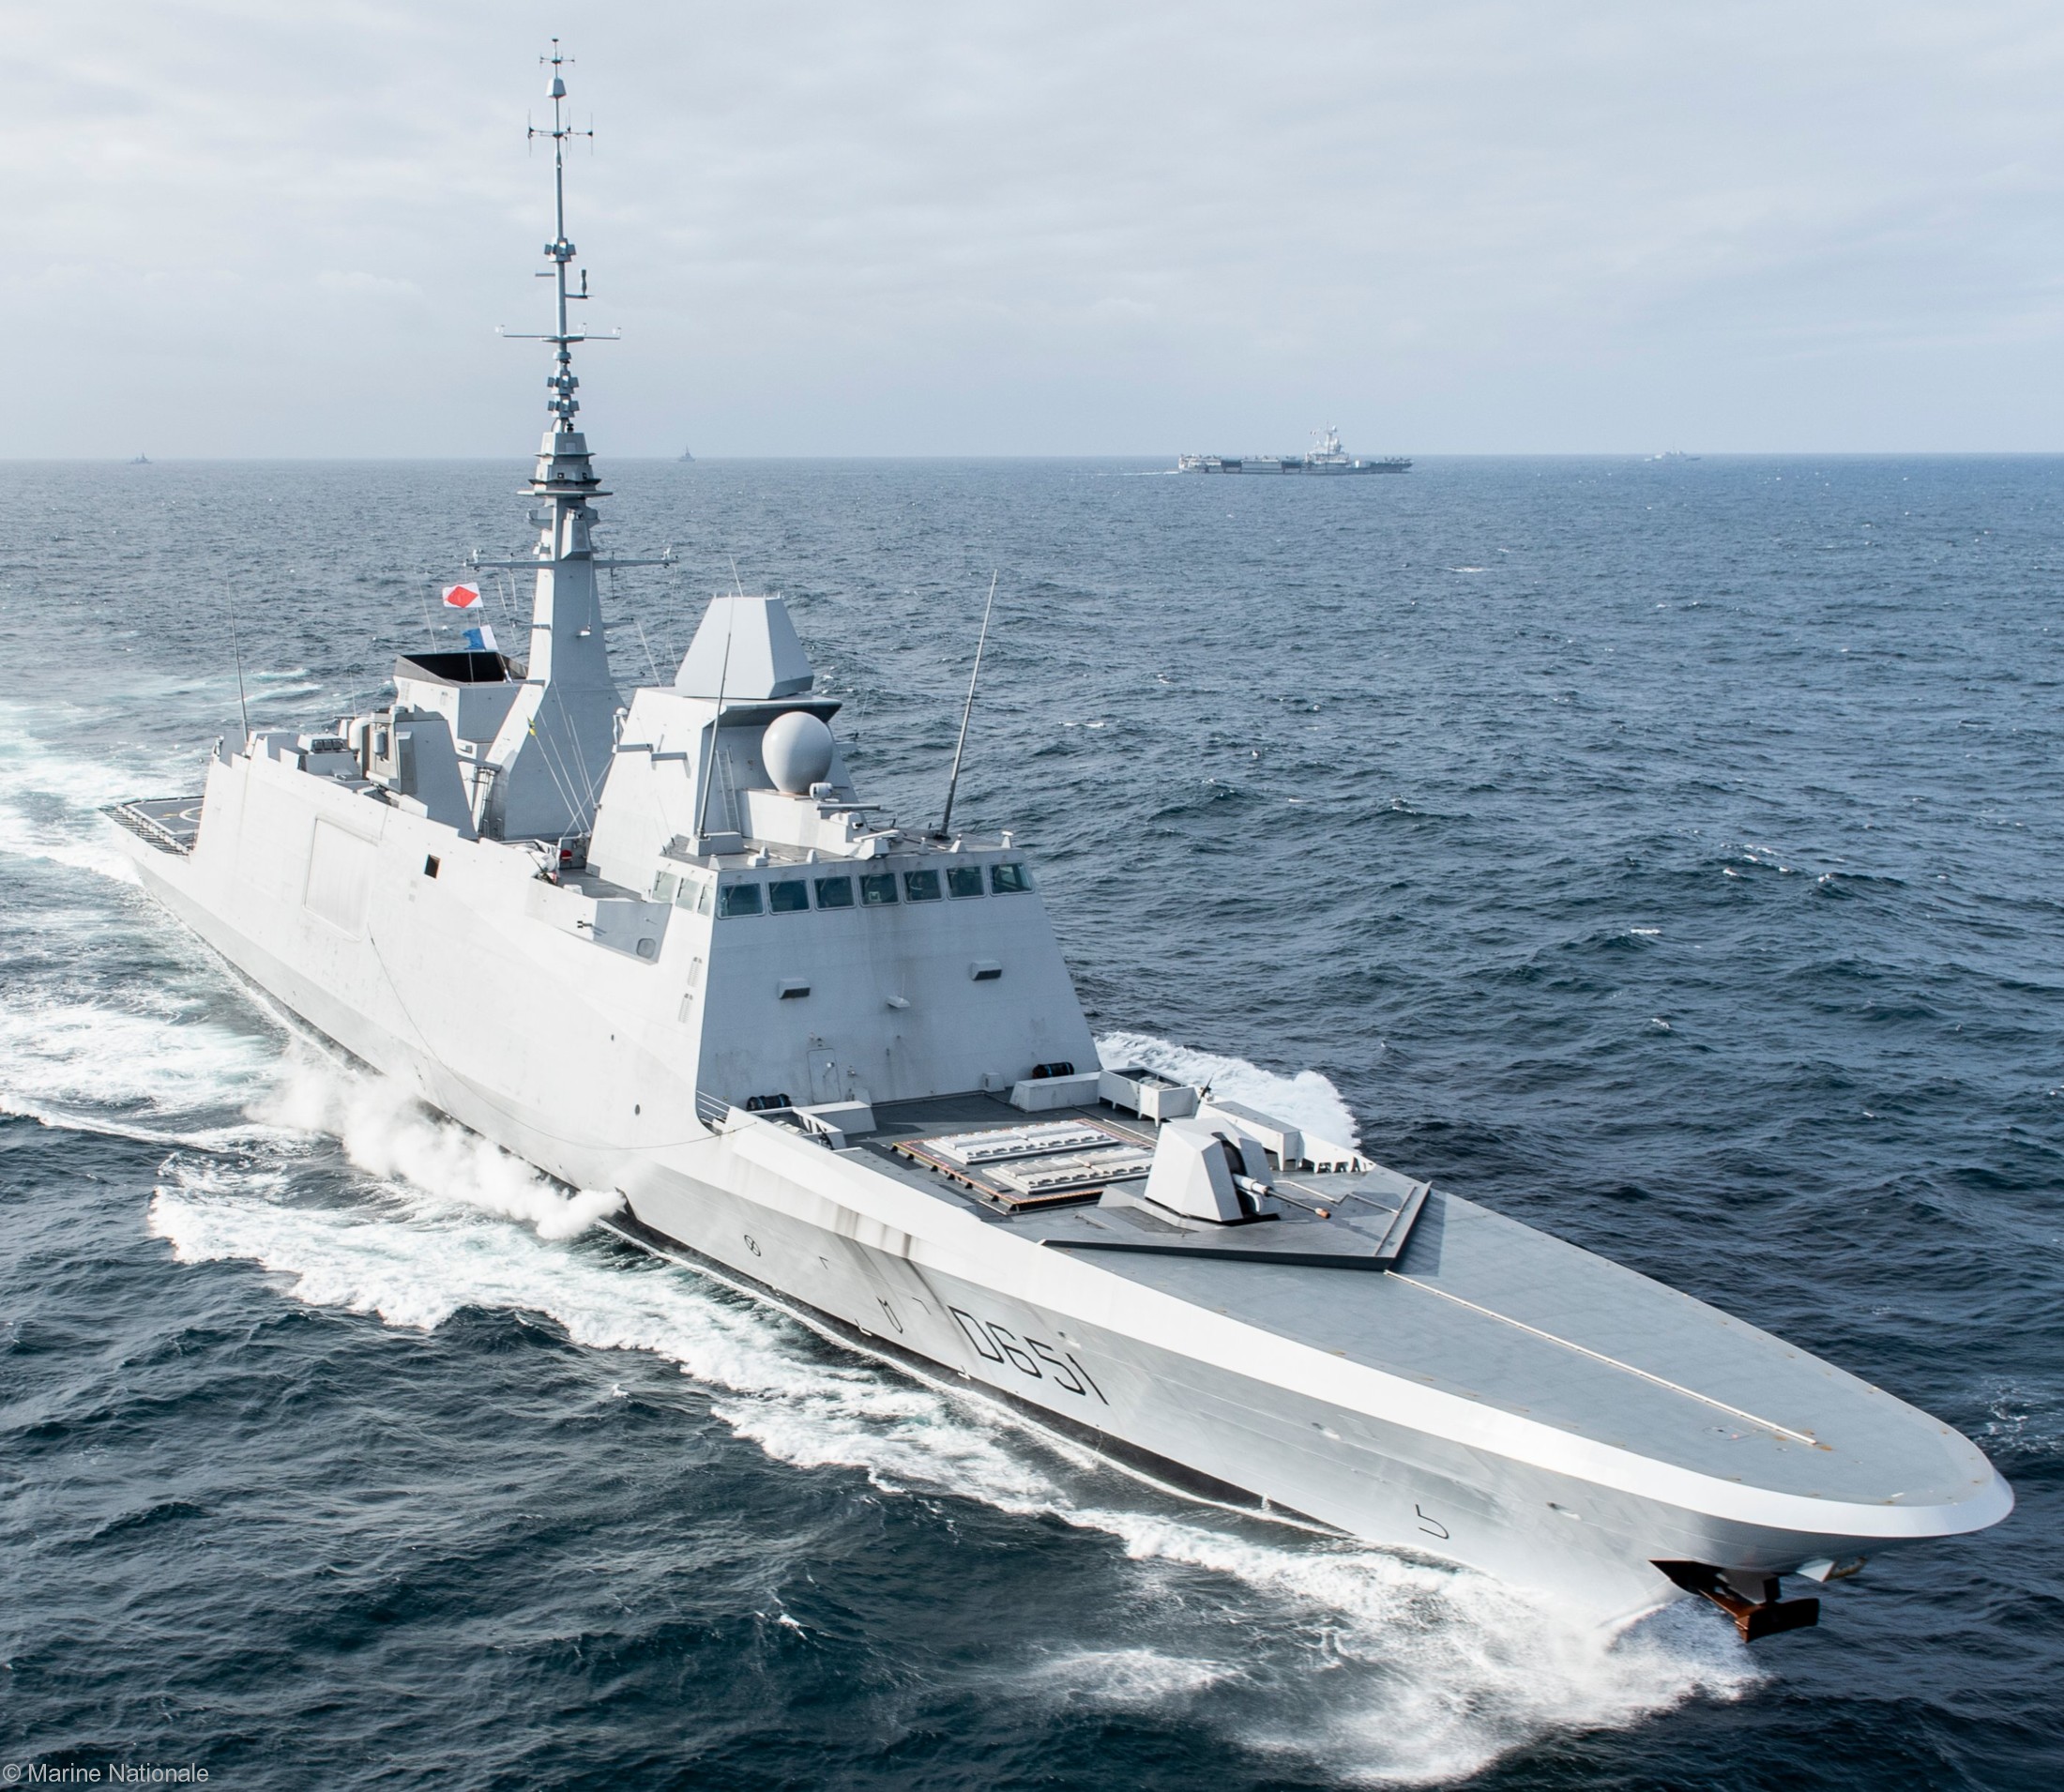 d-651 fs normandie fremm aquitaine class frigate fregate multi purpose french navy marine nationale 05